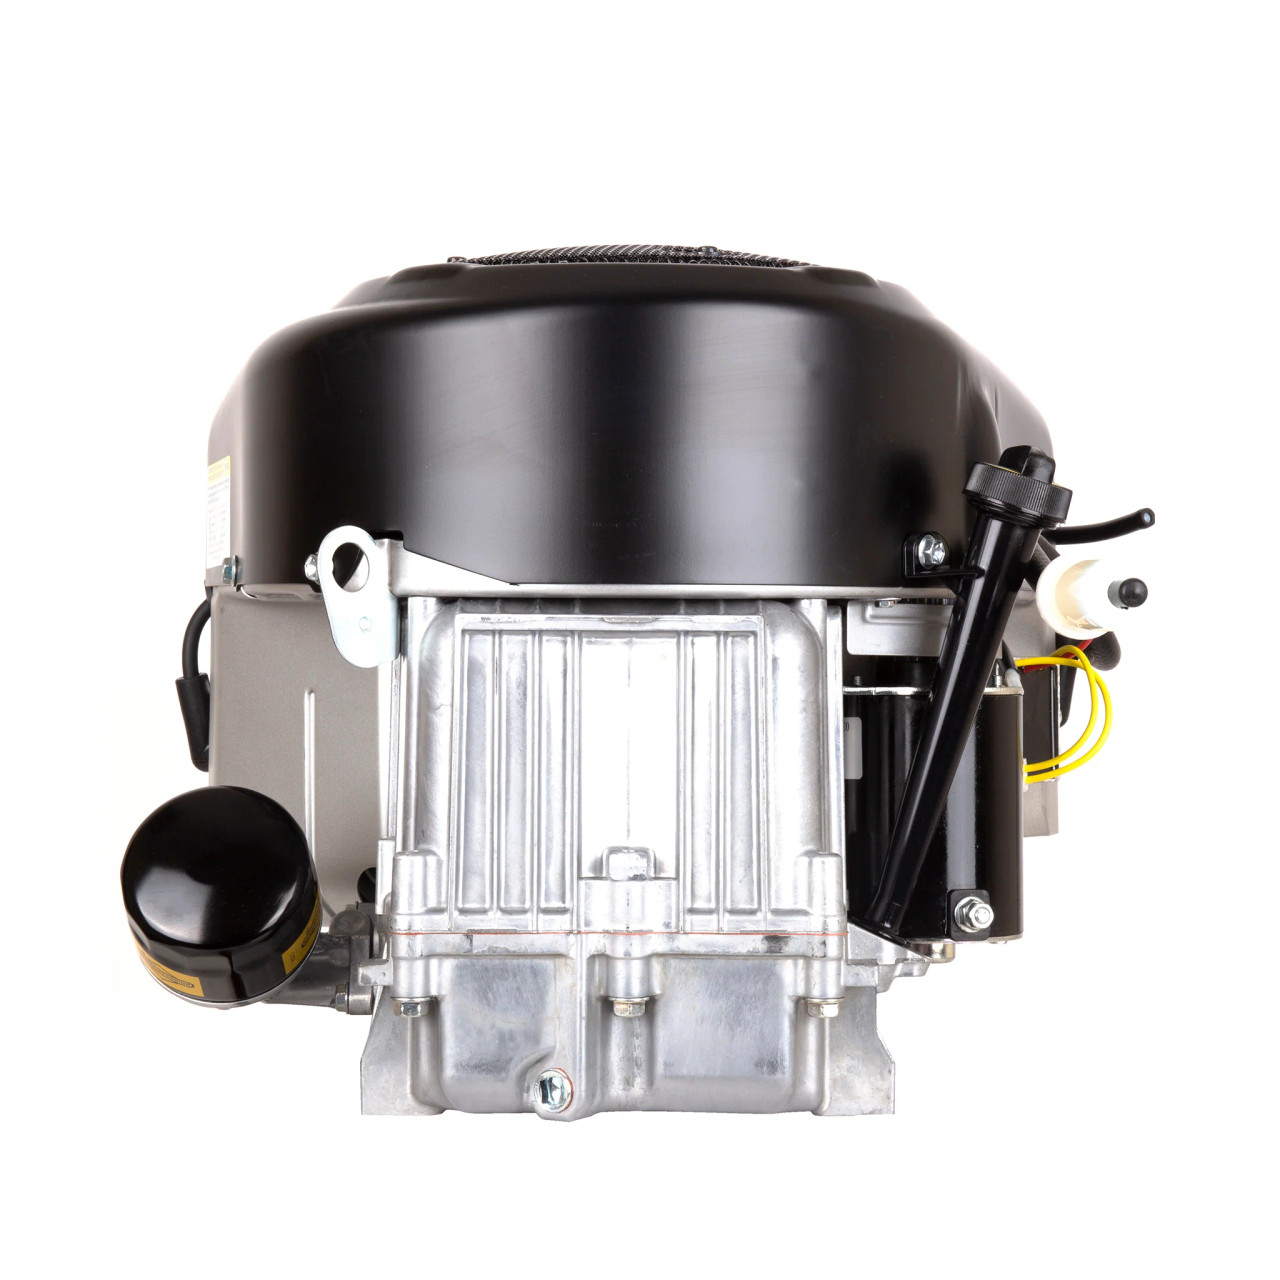 Vanguard 18.0 HP 570cc Vertical Shaft Engine 356777-0154-G1